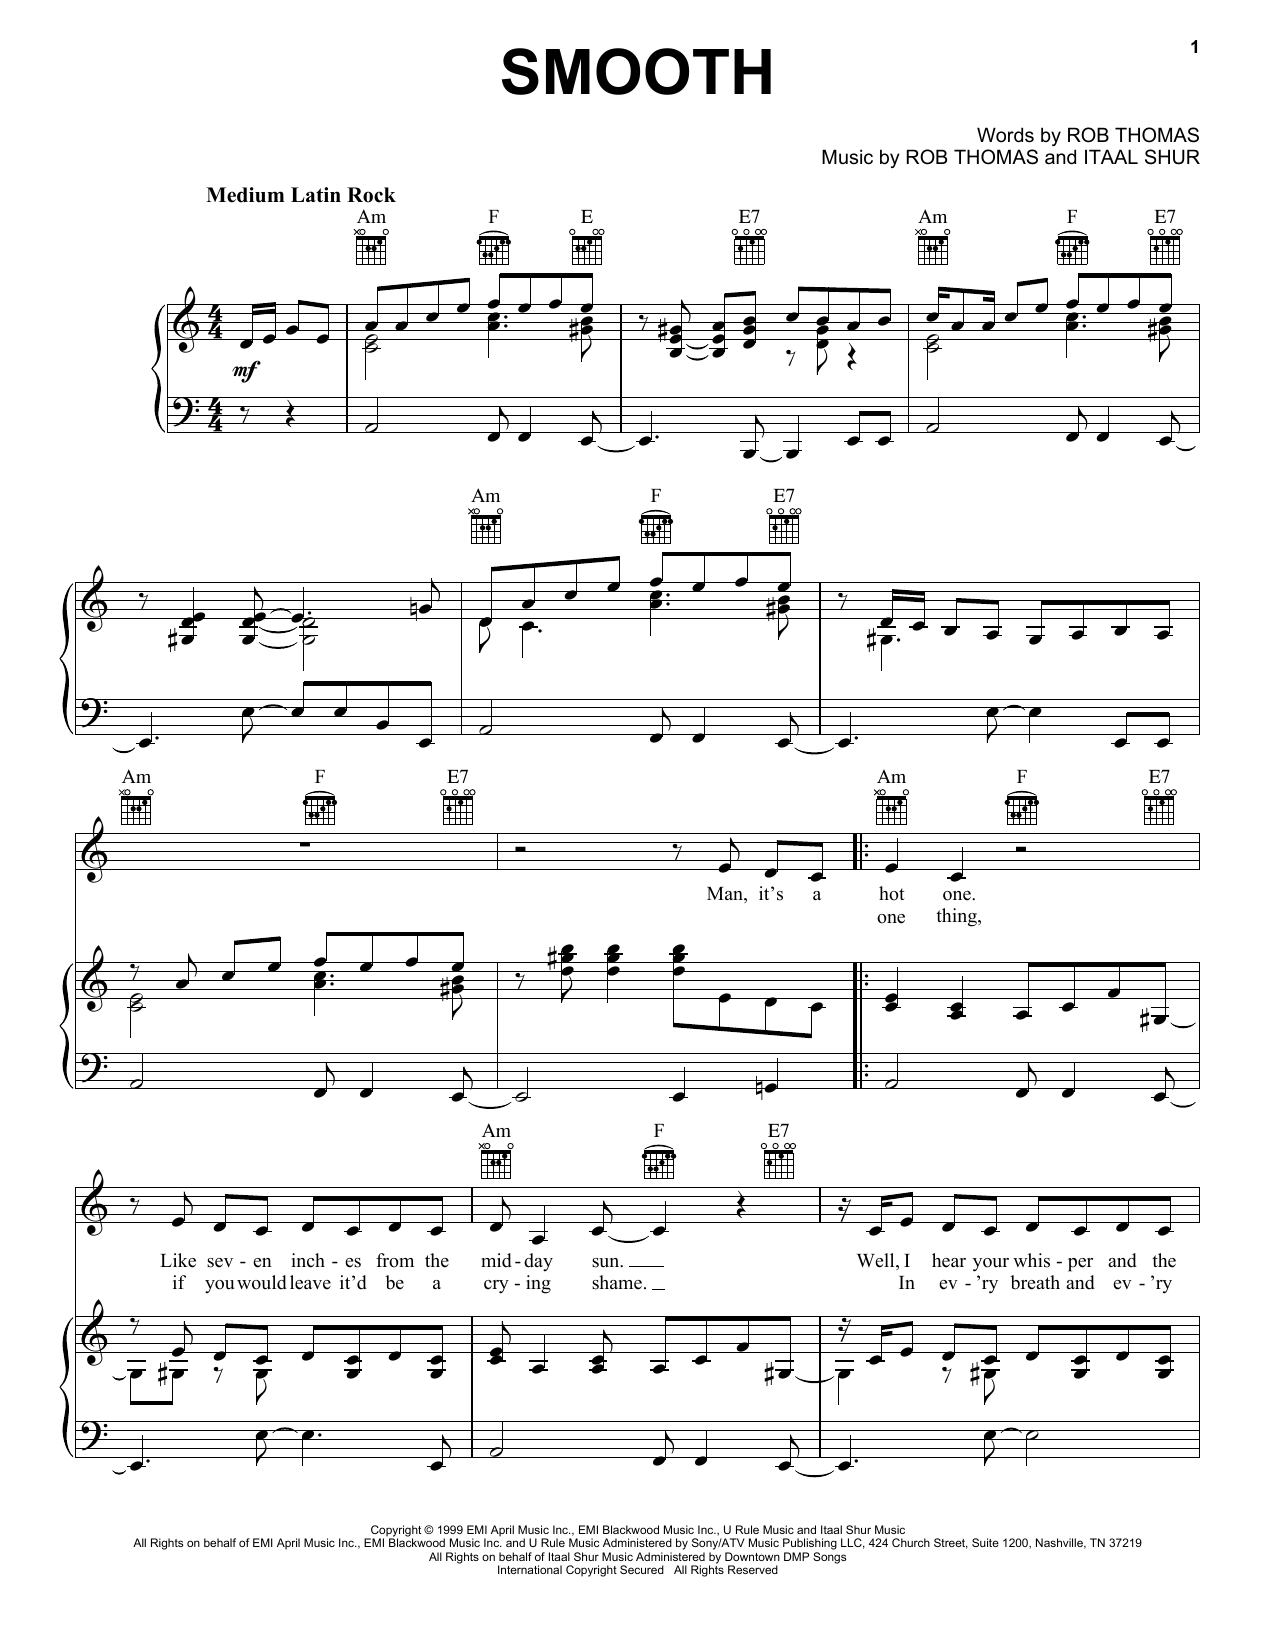 Santana featuring Rob Thomas Smooth Sheet Music Notes & Chords for Lyrics & Piano Chords - Download or Print PDF